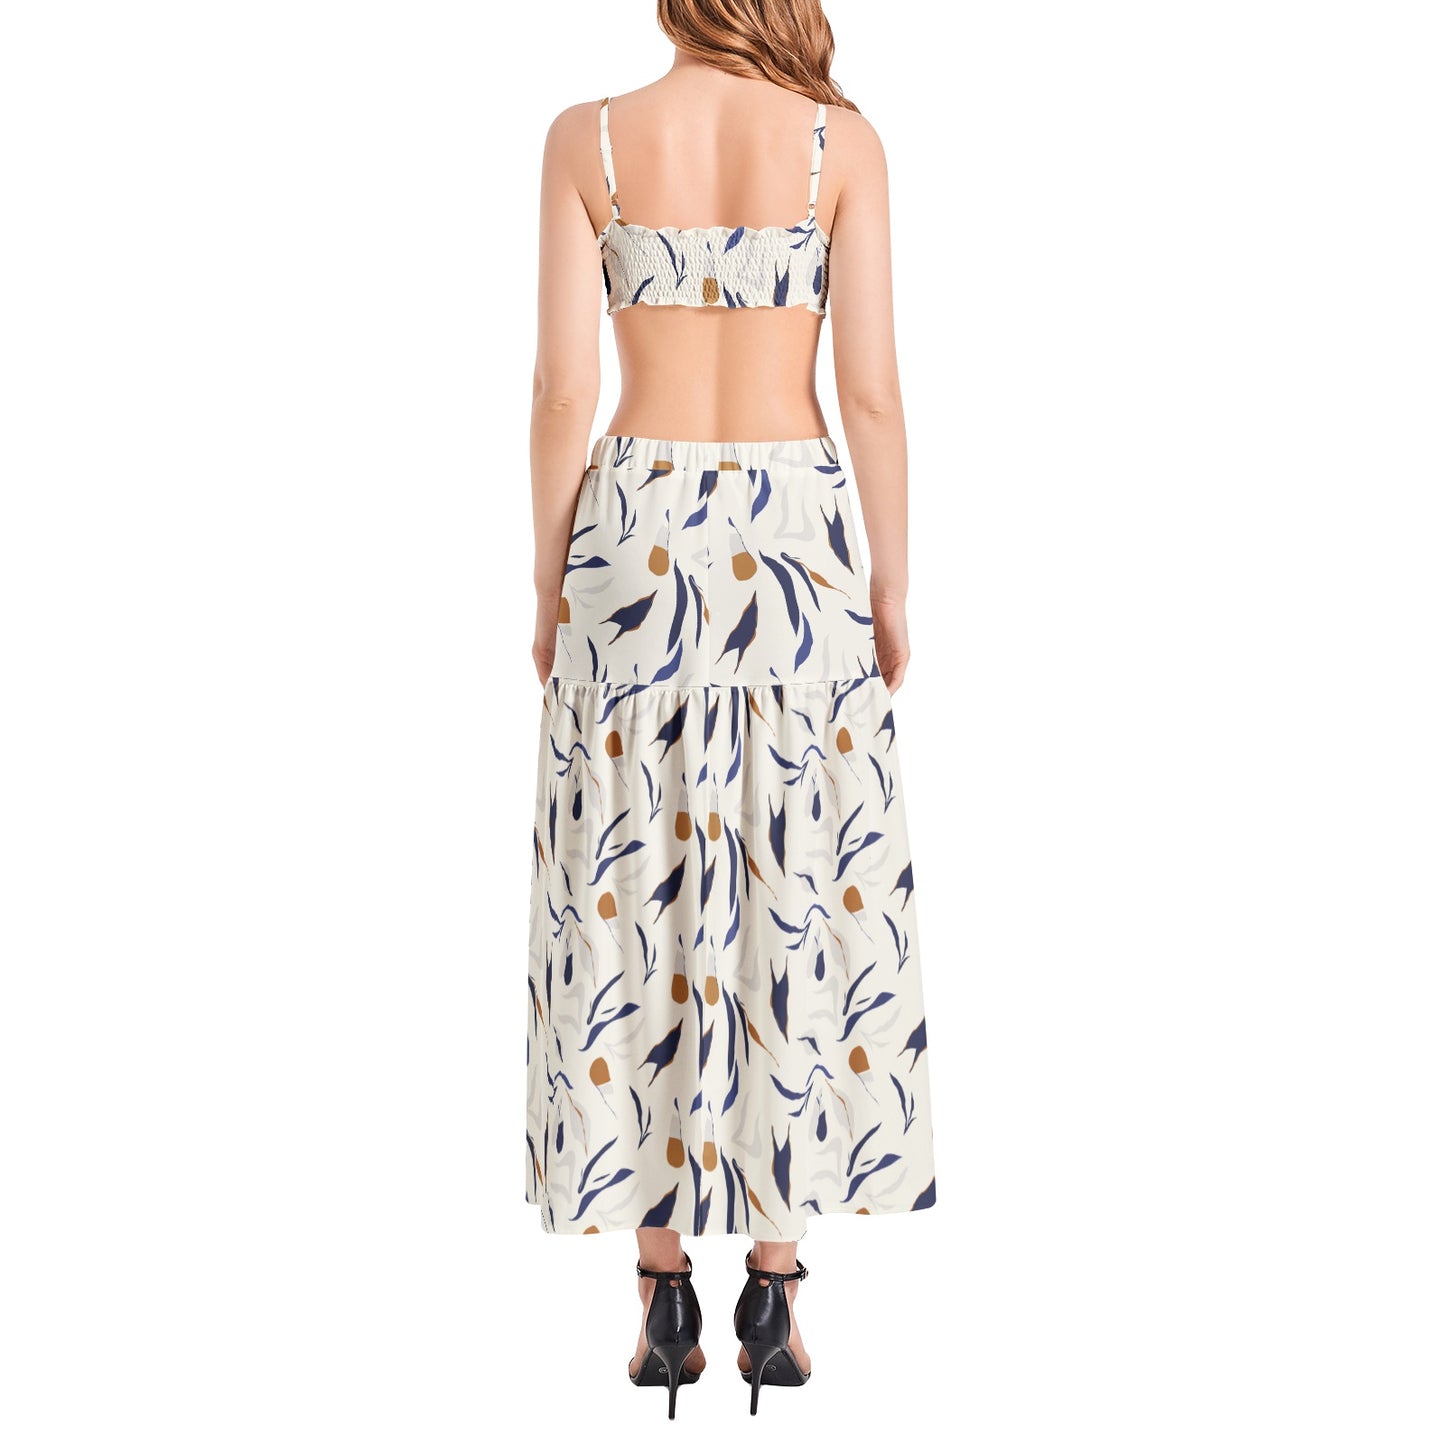 Bralette Top and High Slit Thigh Skirt Set